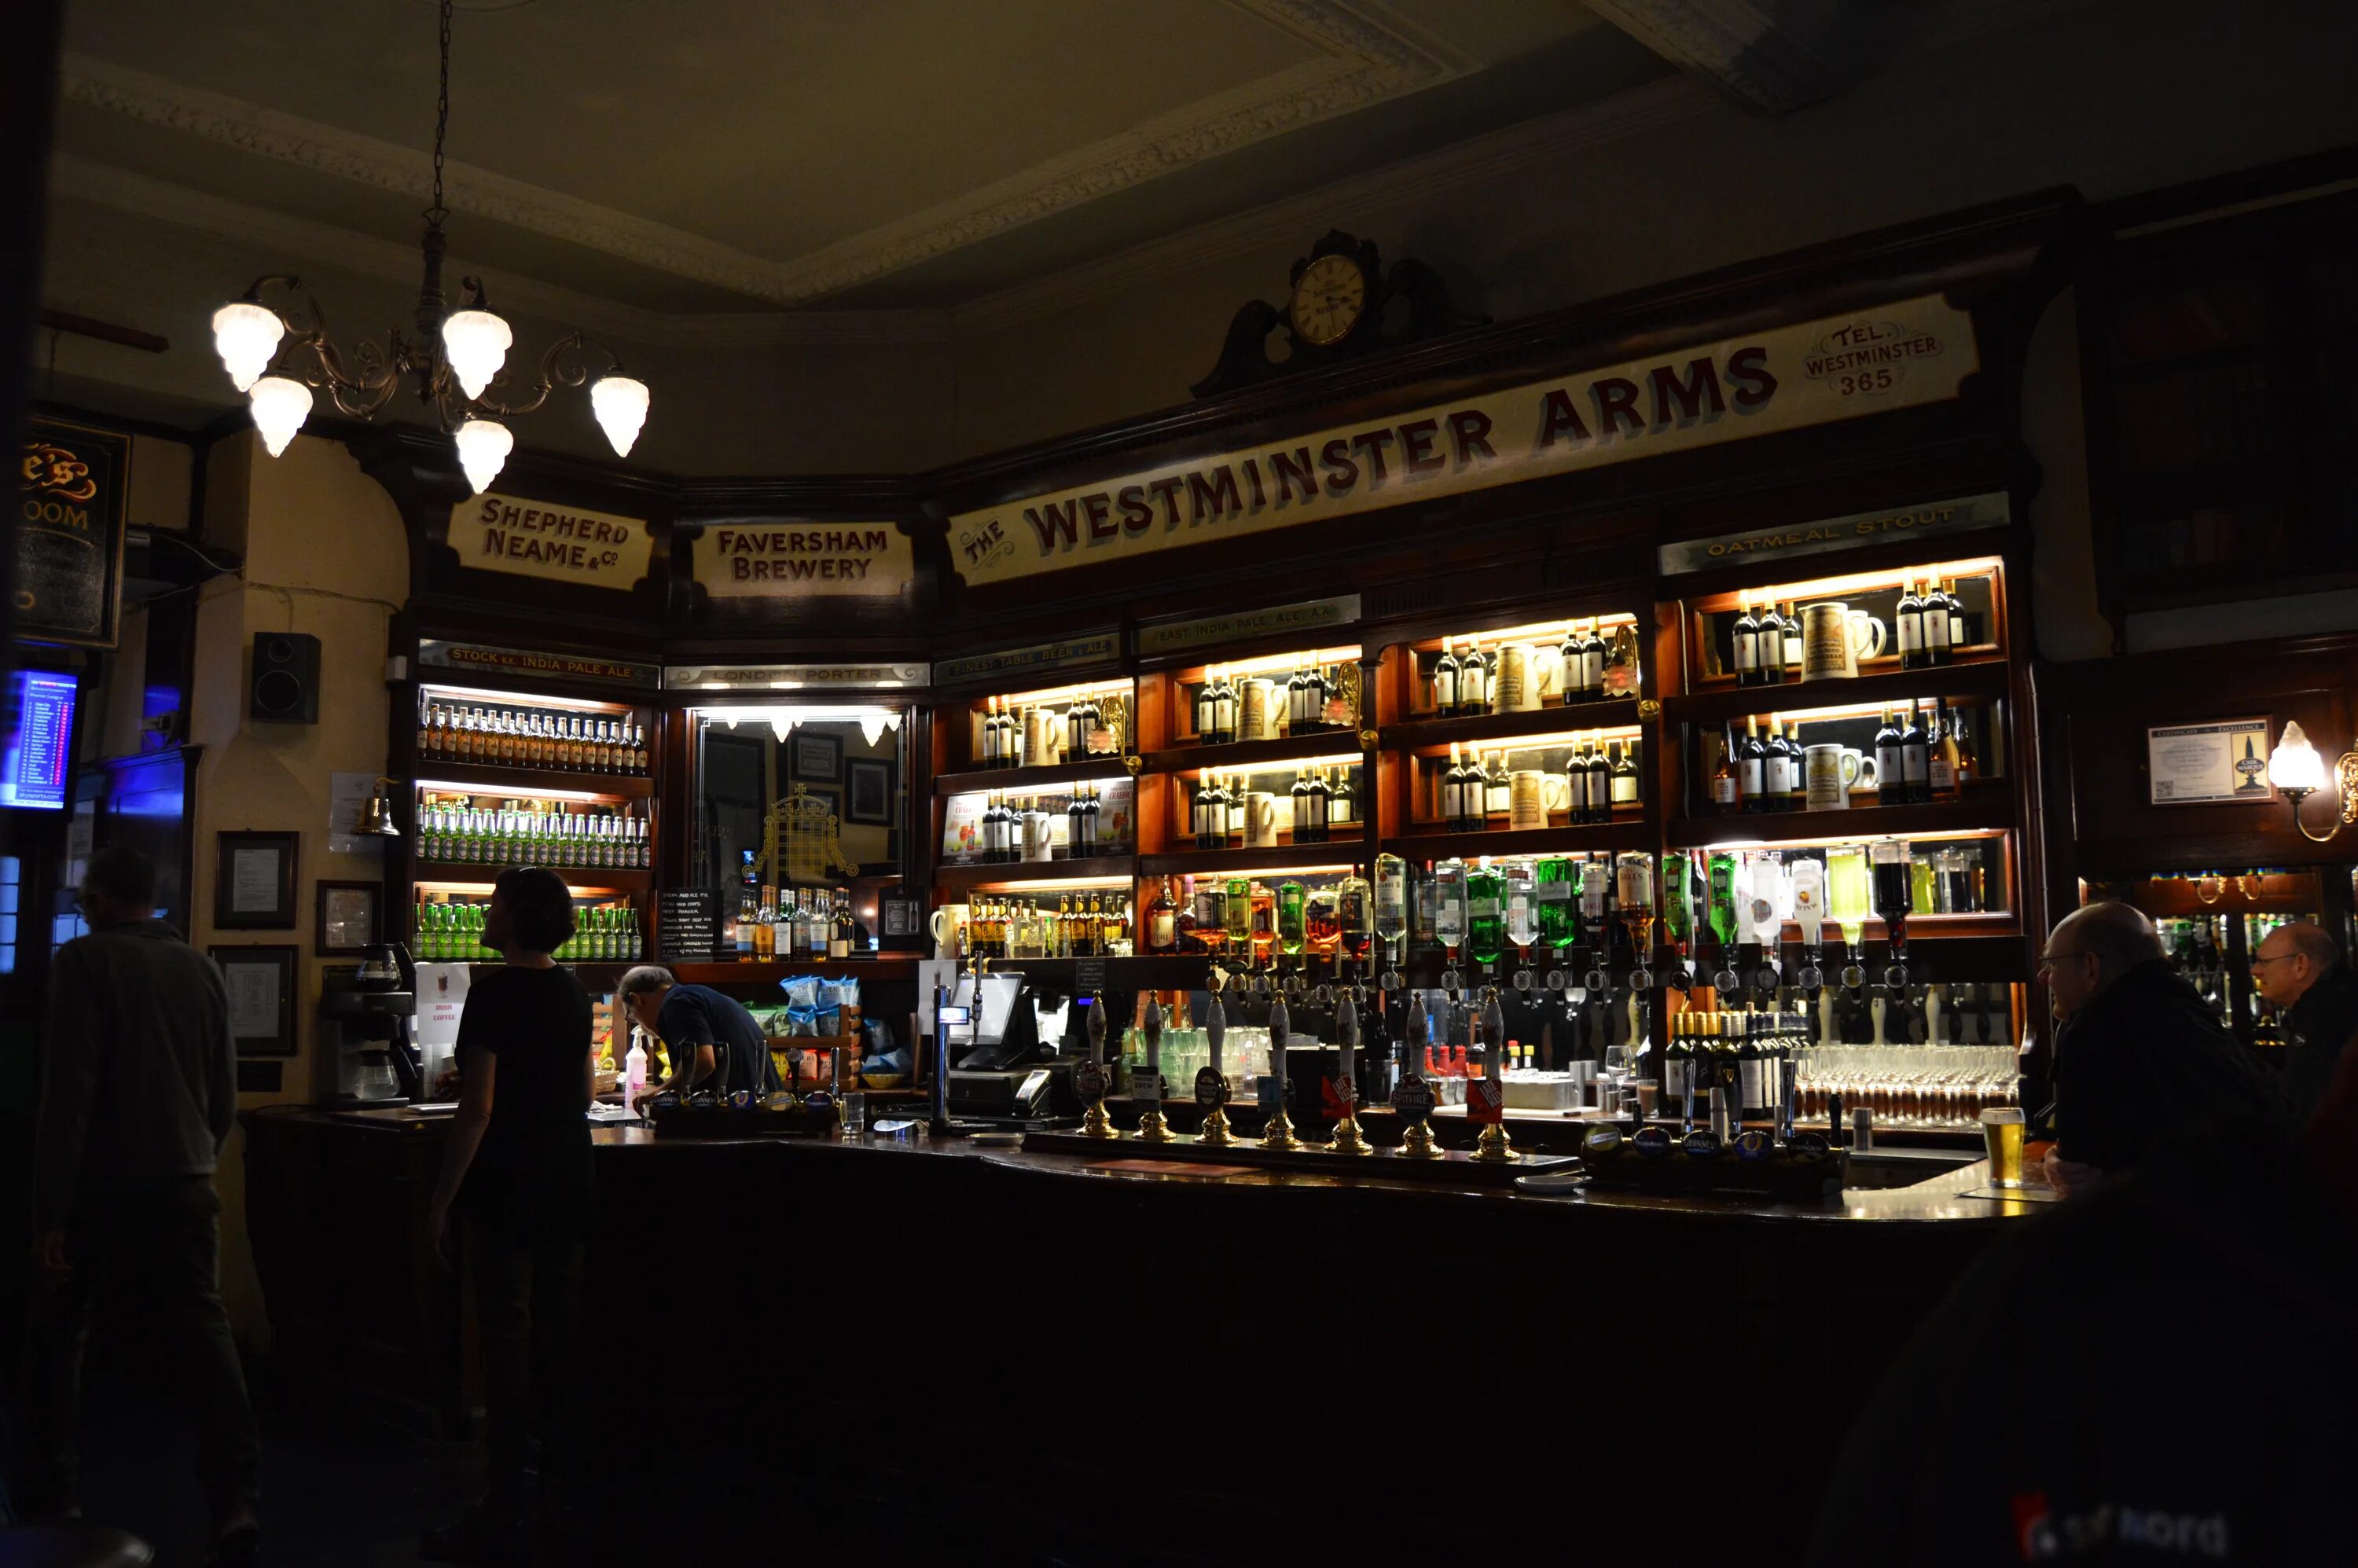 Вестминстер Армс. Westminster Arms что это. Westminster Arms кафе. Файл pub. Pub формат